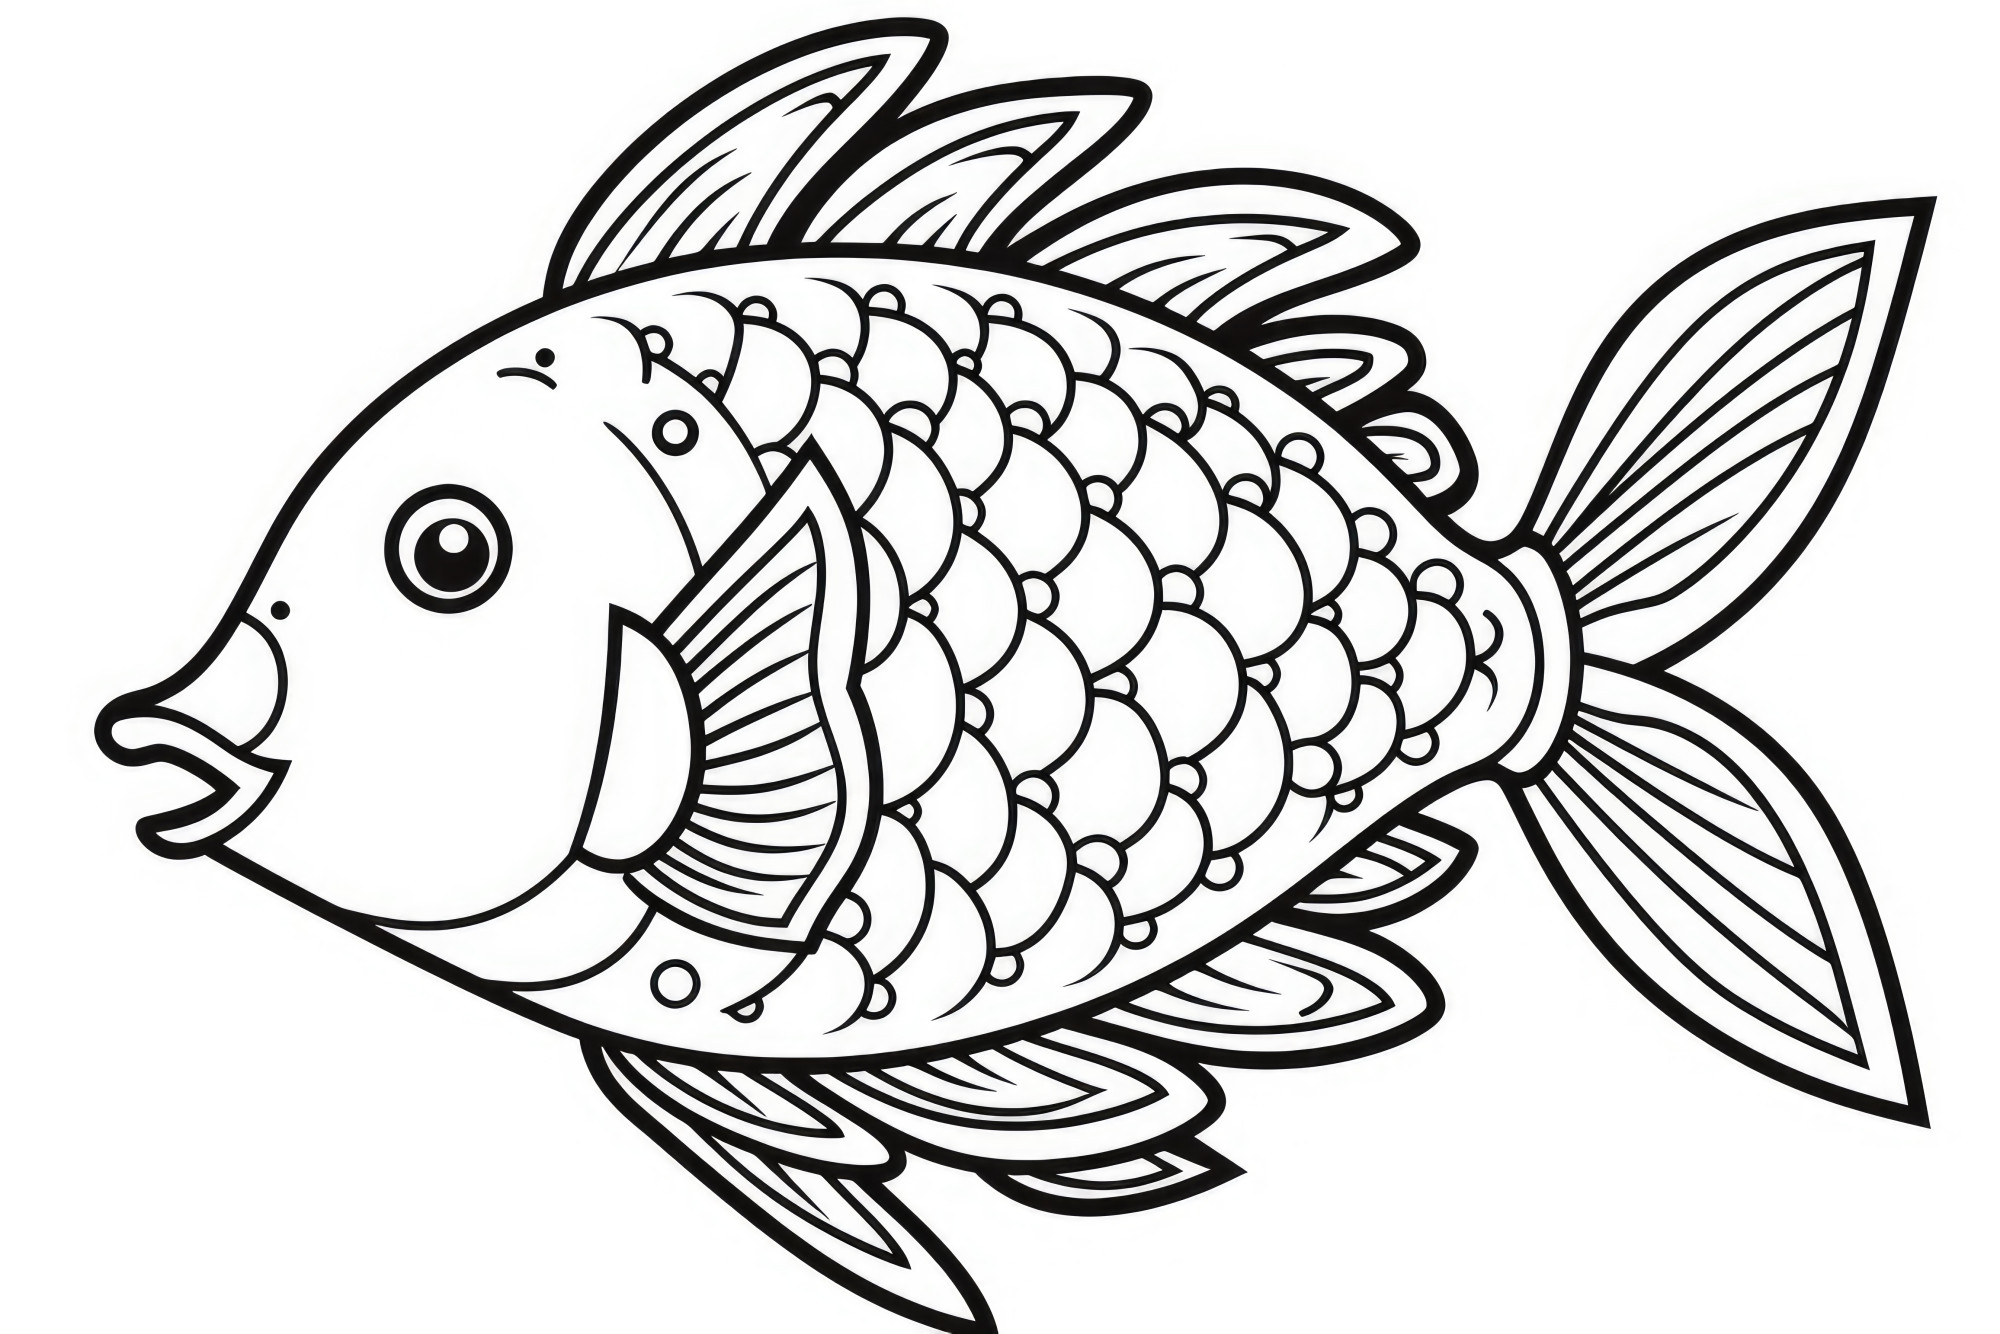 Раскраска для детей: сказочная рыба